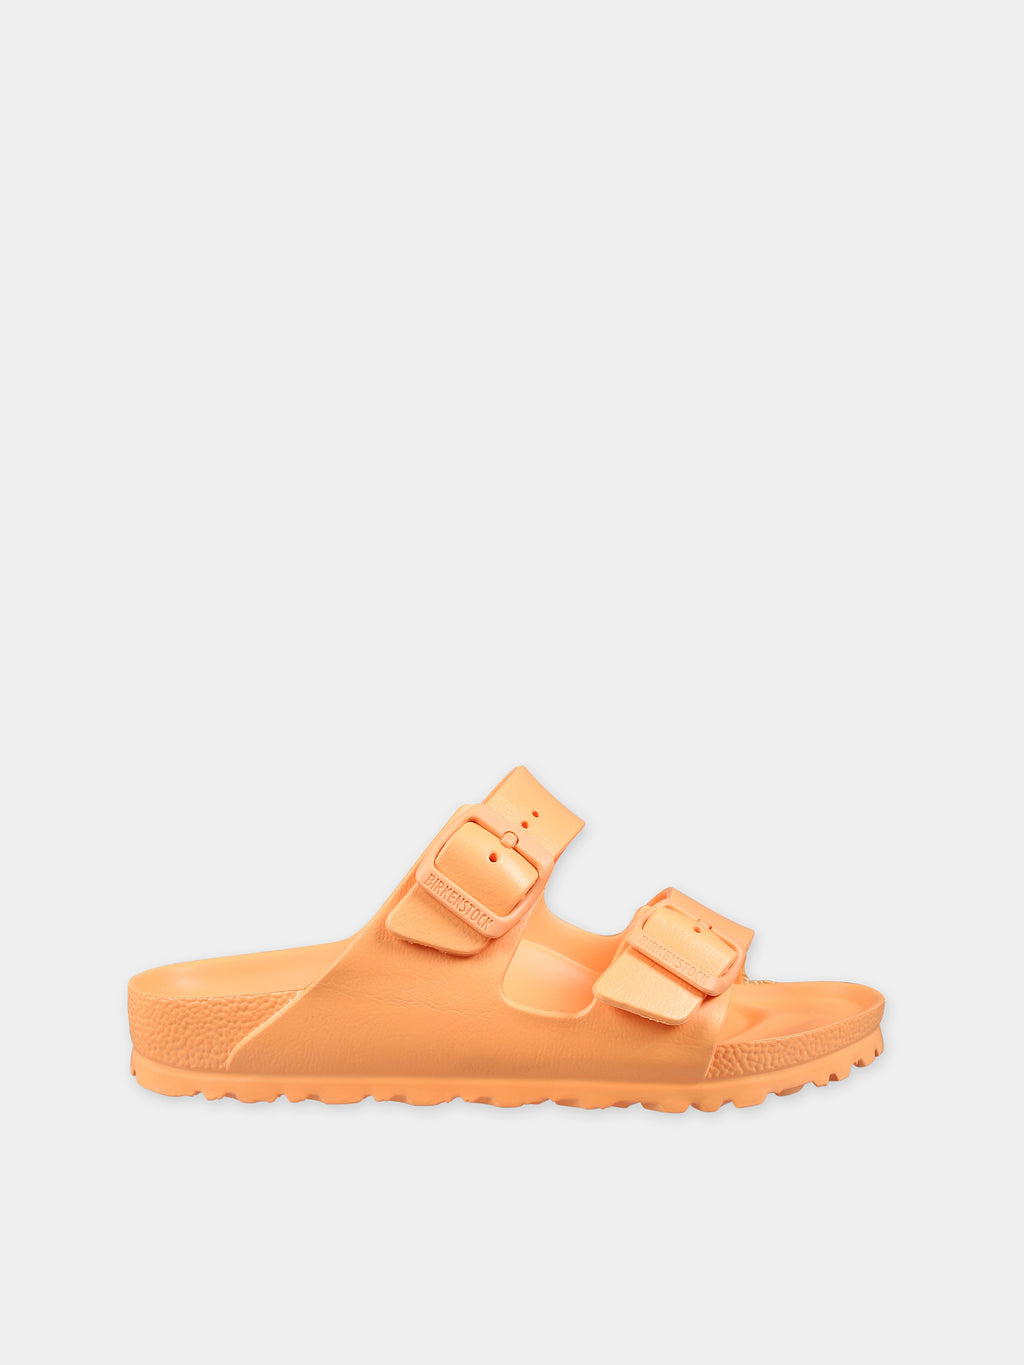 Arizona Eva orange slippers for kids with logo